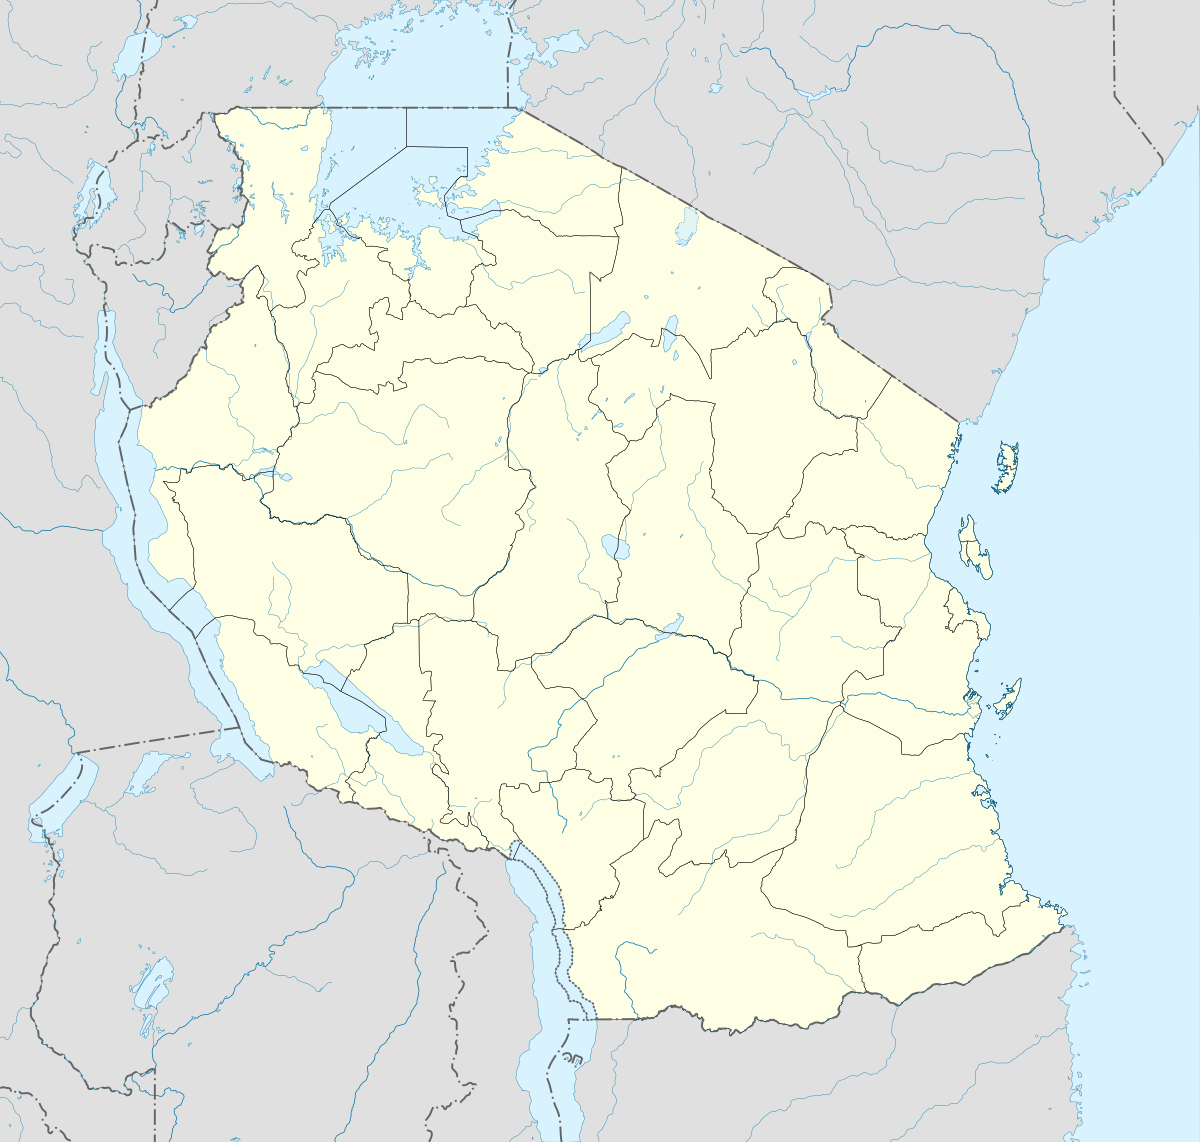 Tanzania location map.svg